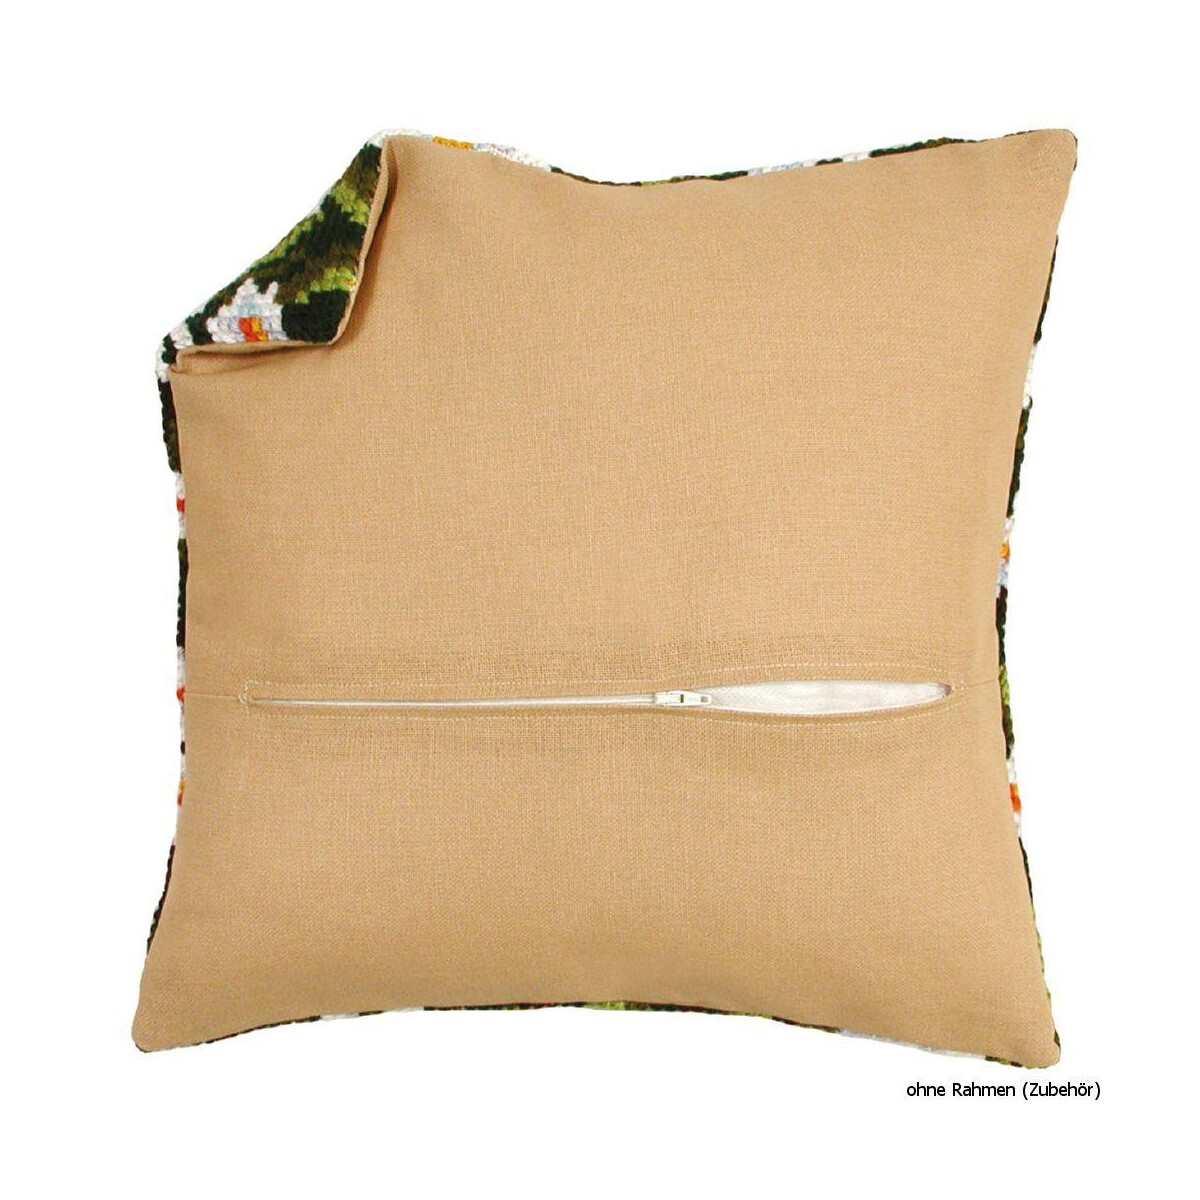 Vervaco cushion back with zipper 30 x 30 cm, beige, DIY